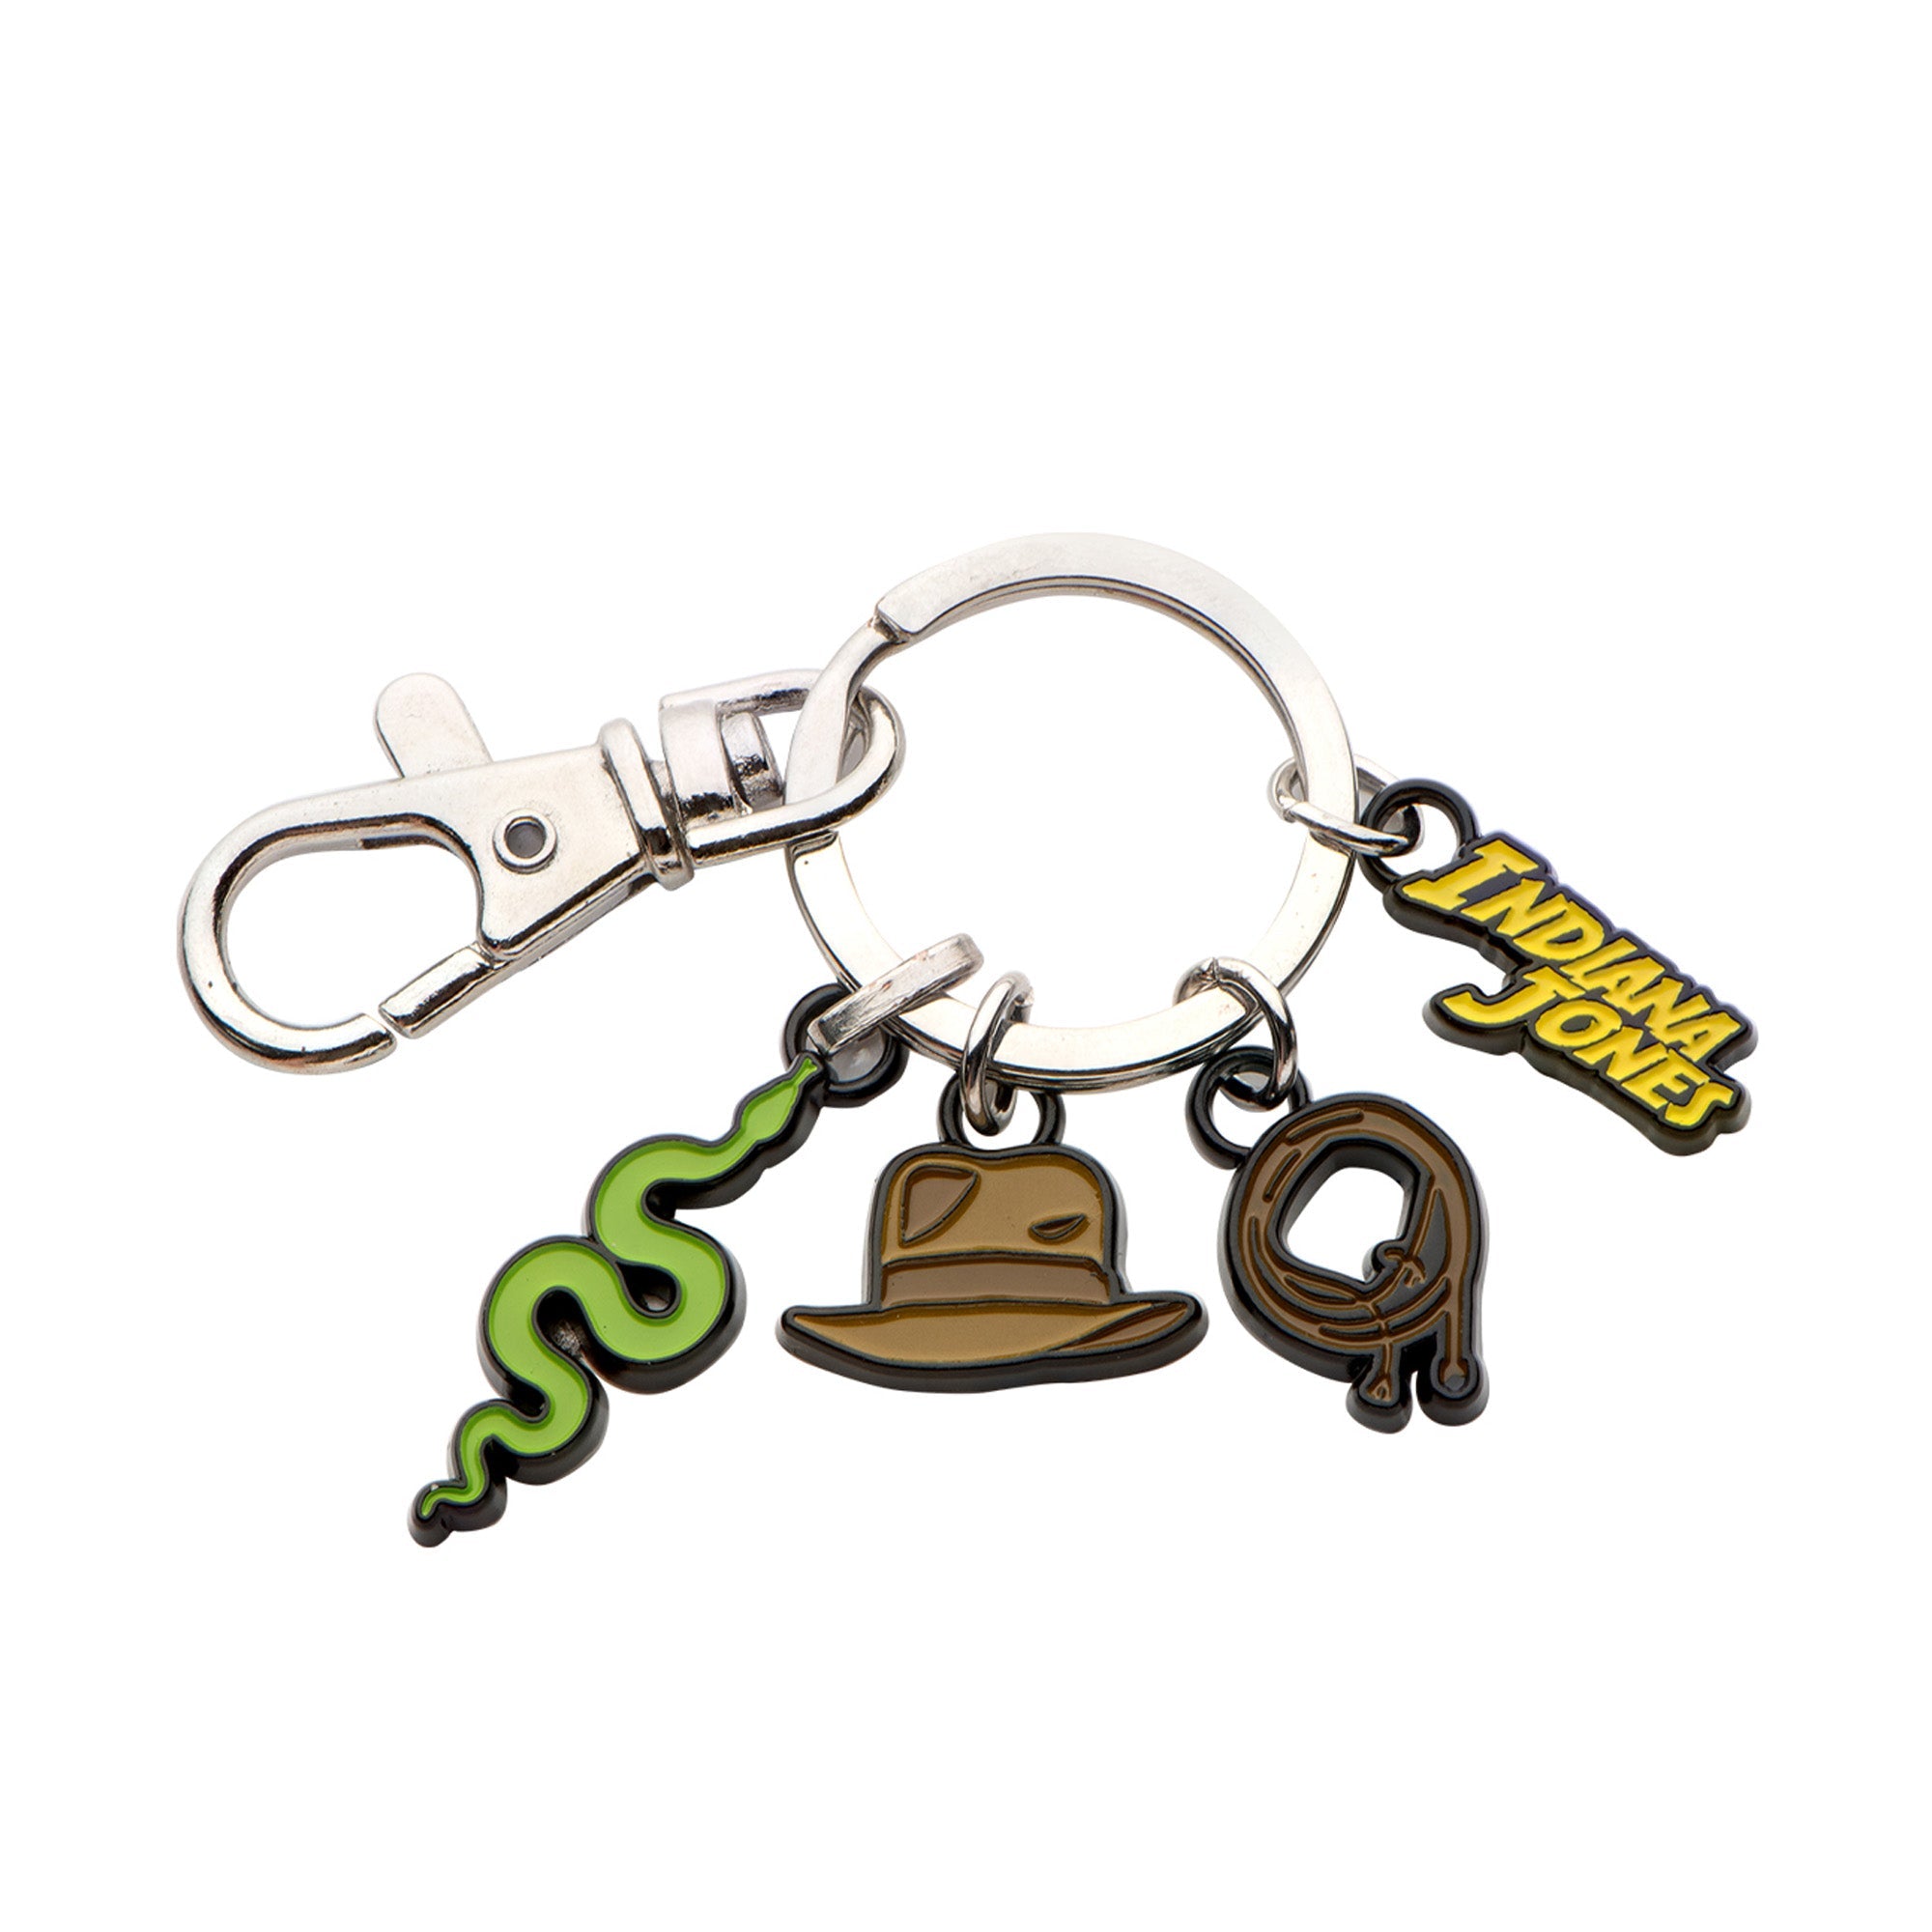 Indiana Jones 5 Charms Keychain